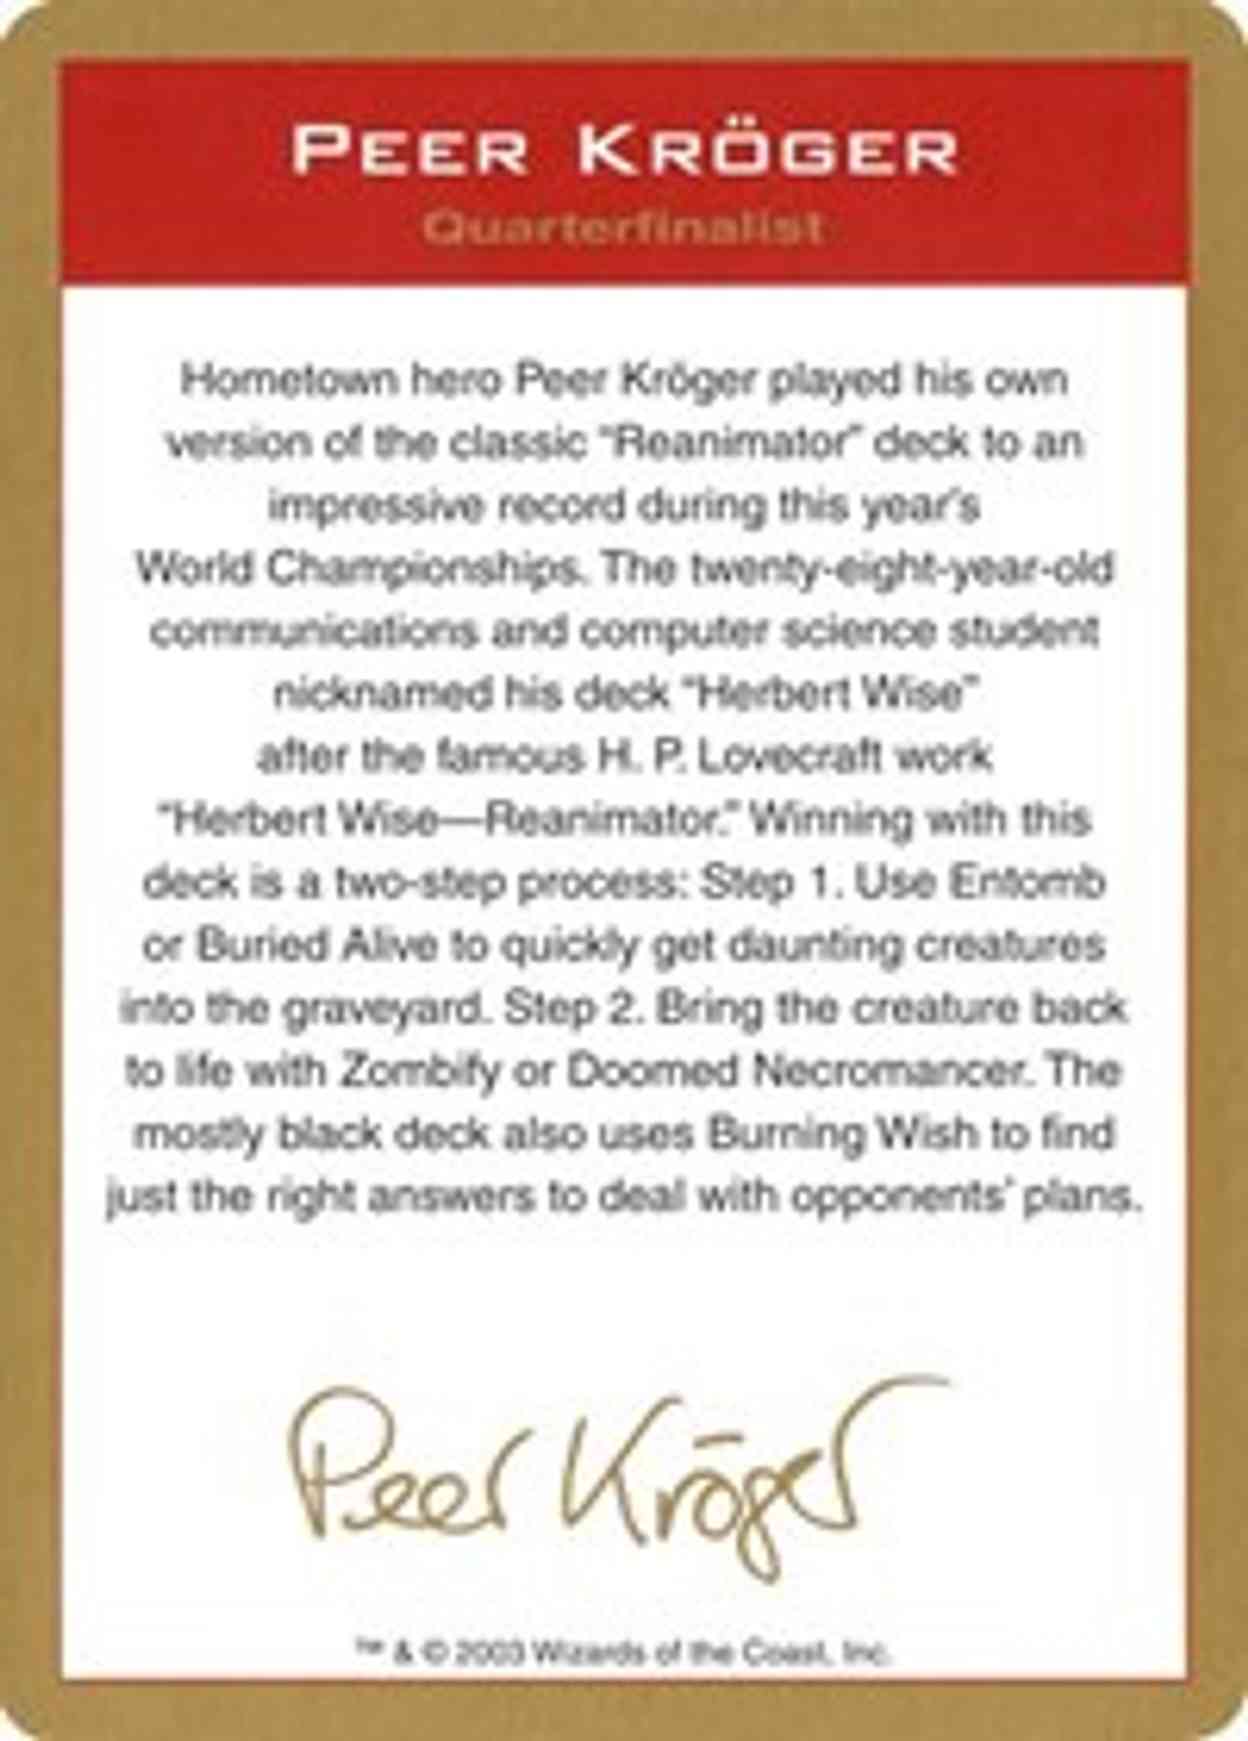 2003 Peer Kroger Biography Card magic card front